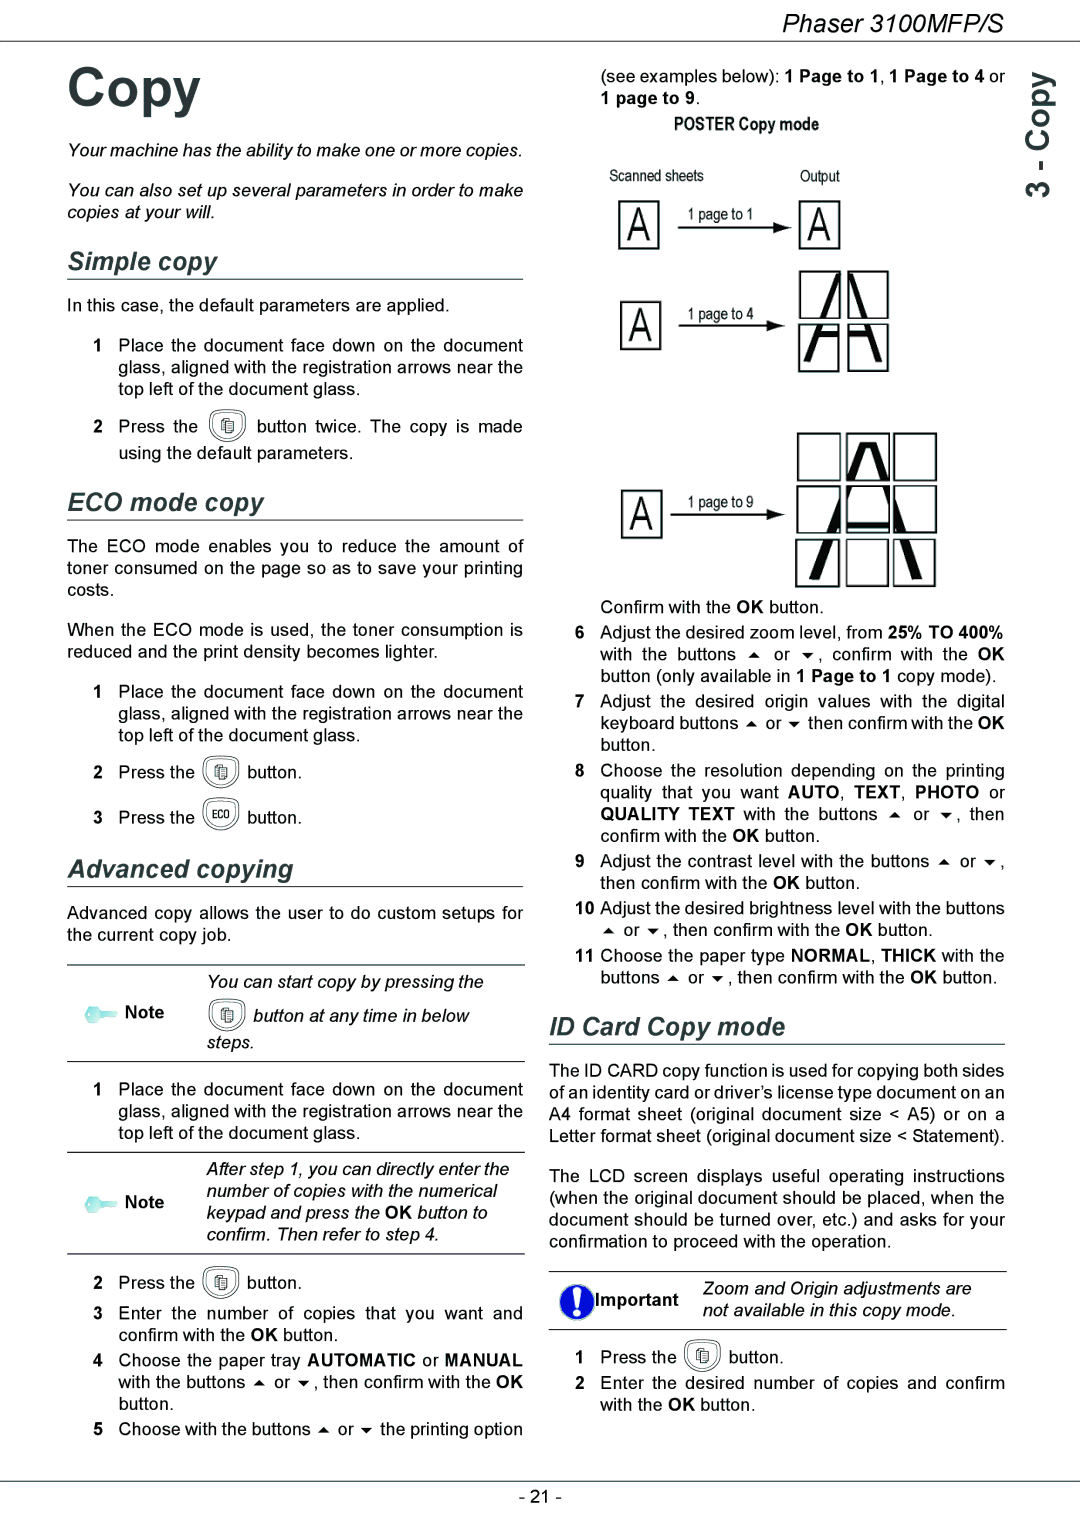 Xerox 3100MFP/S manual Simple copy, ECO mode copy, Advanced copying, ID Card Copy mode 